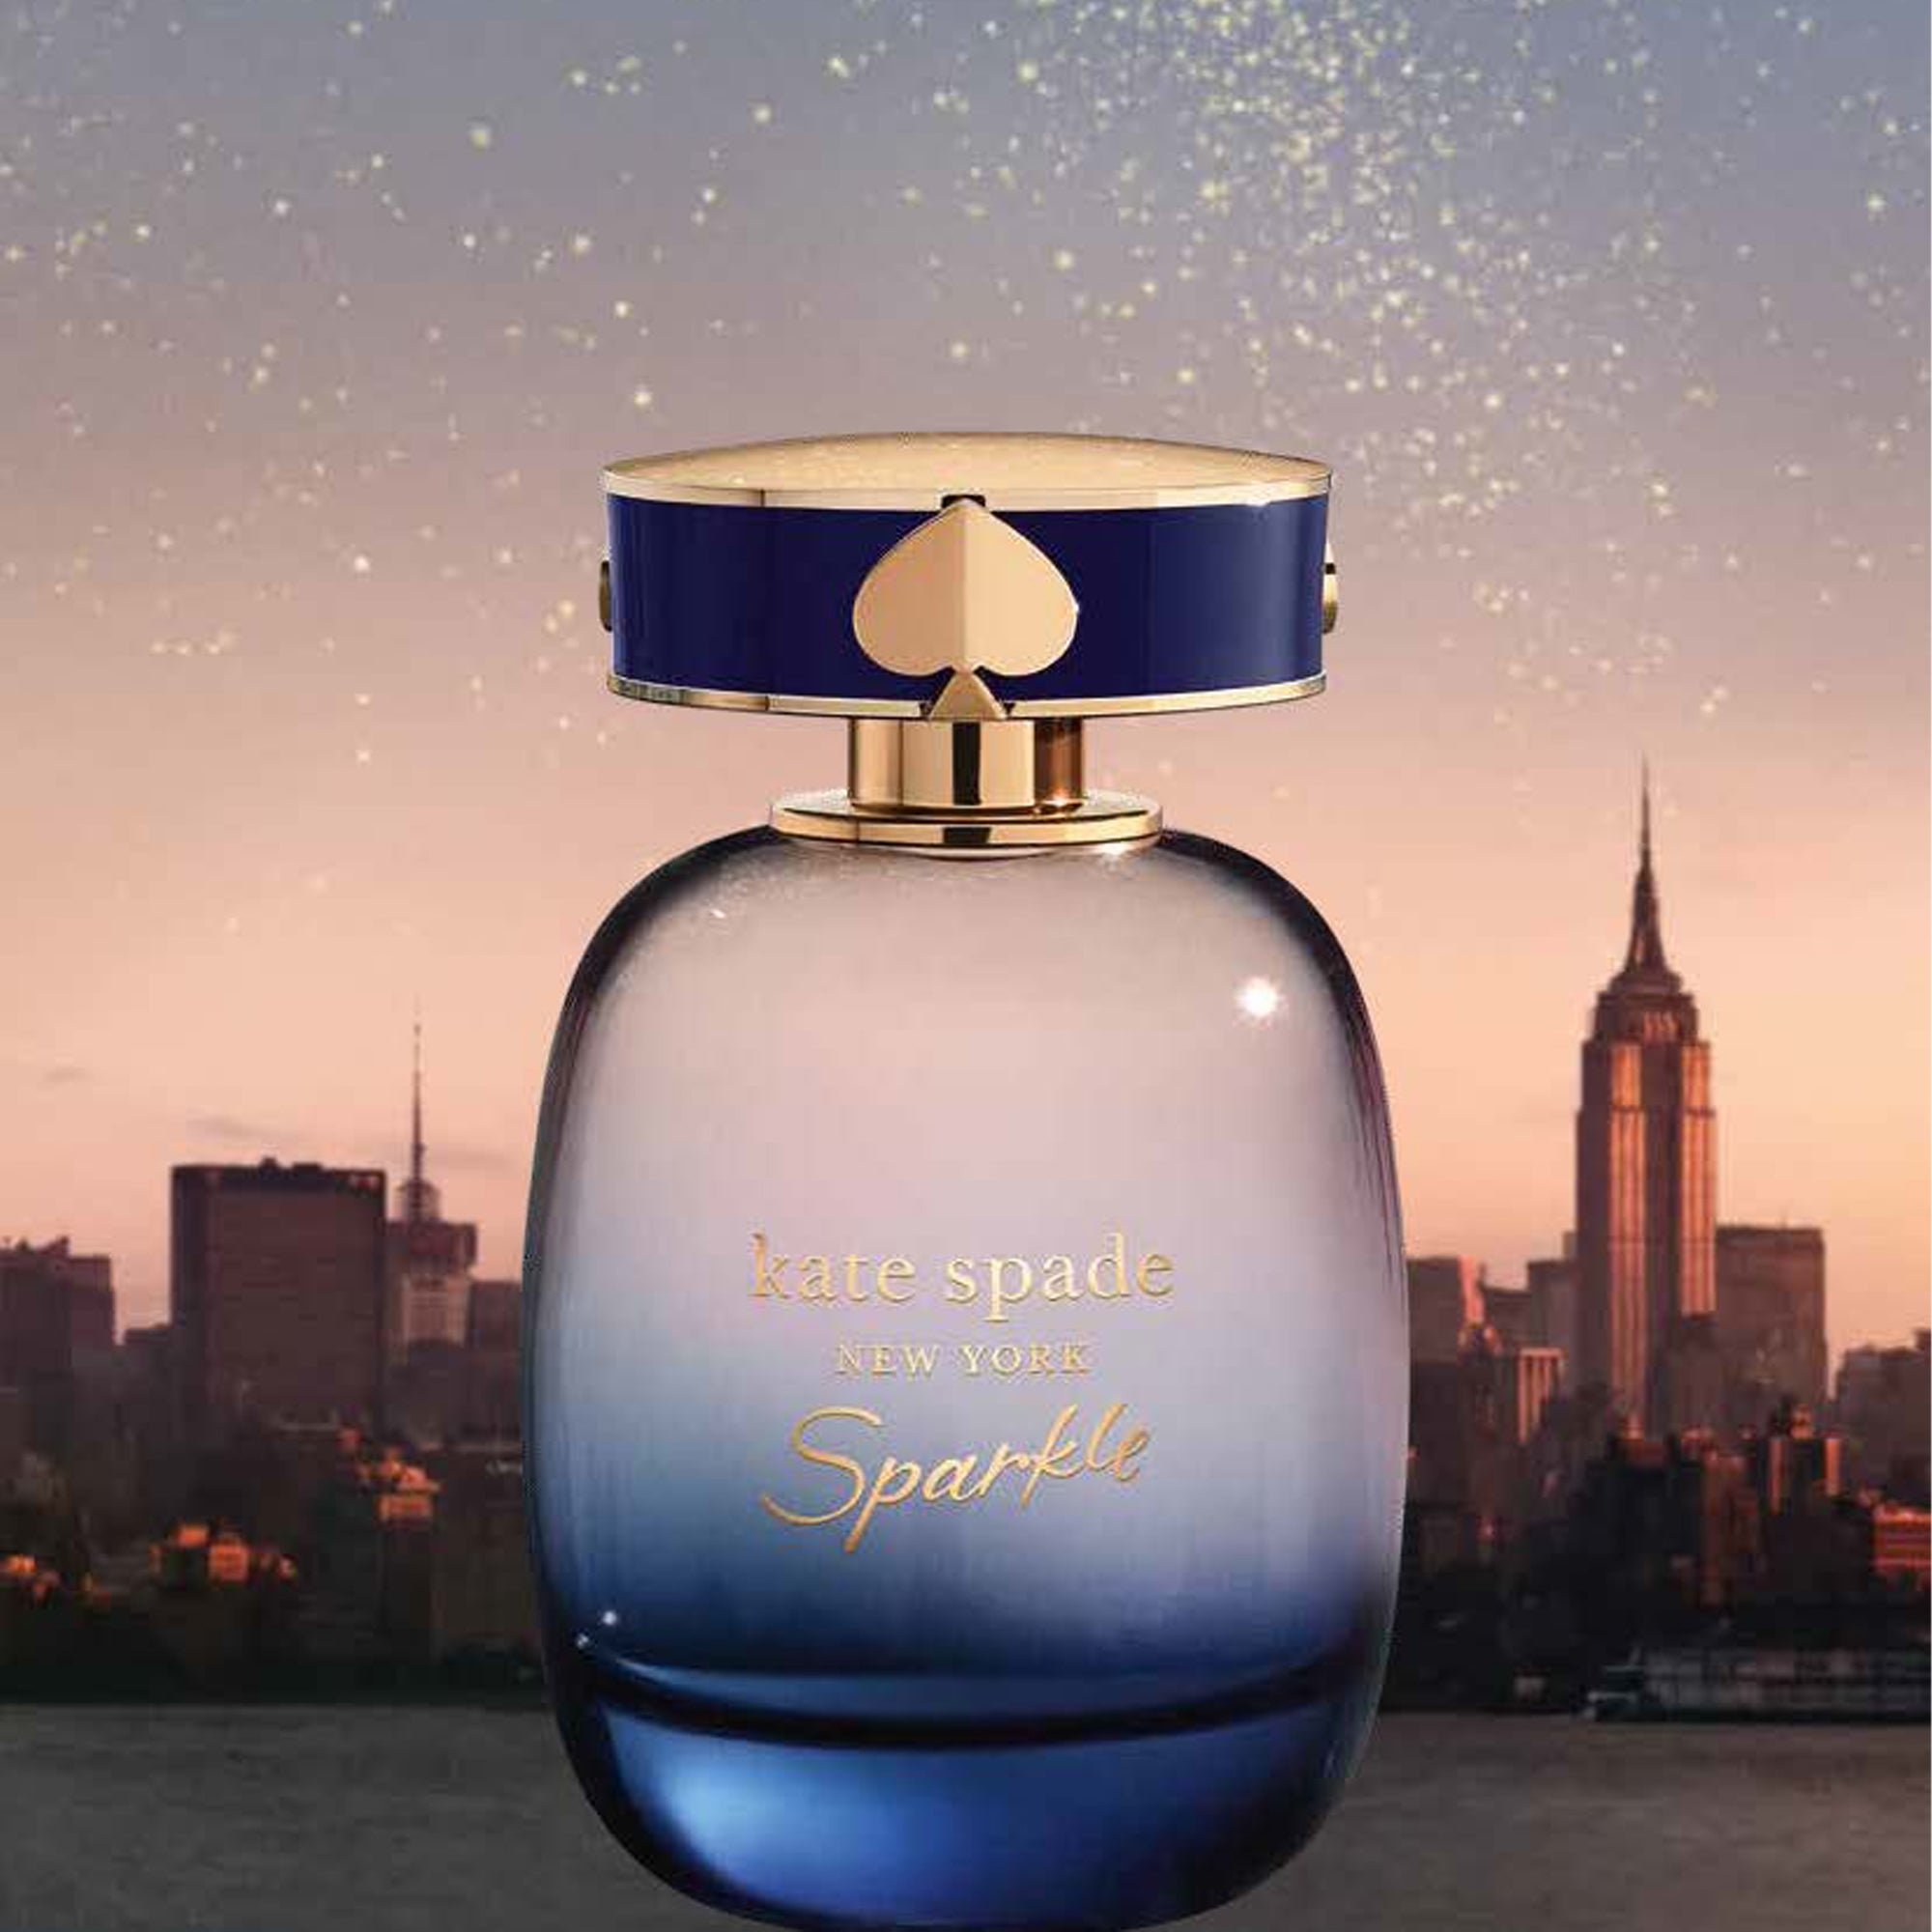 Kate Spade New York Sparkle Eau De Parfum 100ml - Perfume